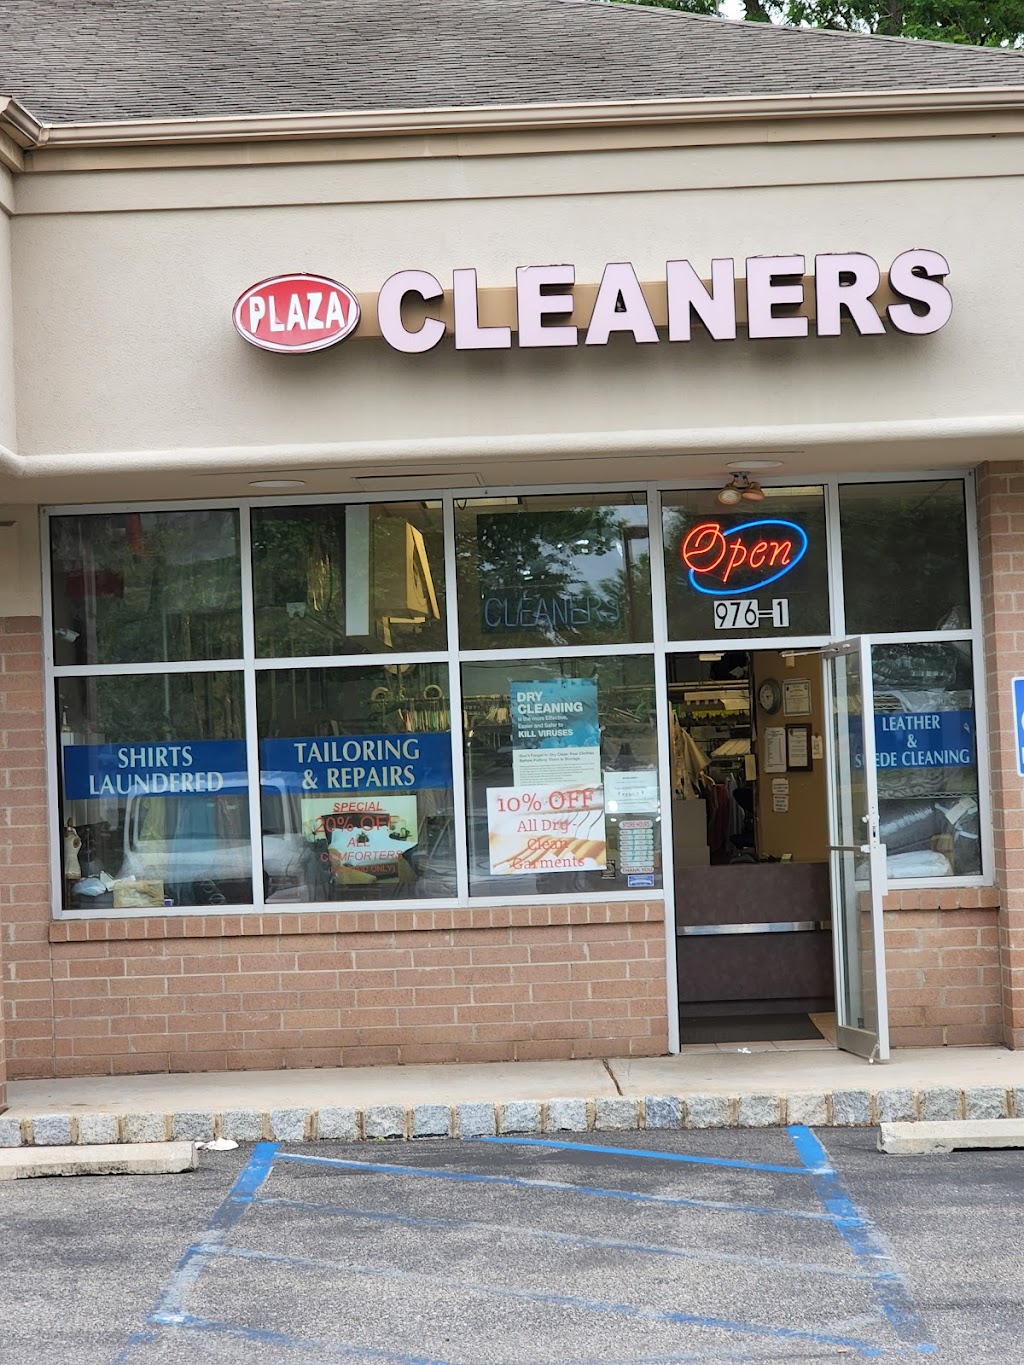 Inman Plaza Cleaners | 976-1 Inman Ave, Edison, NJ 08820 | Phone: (908) 791-9399